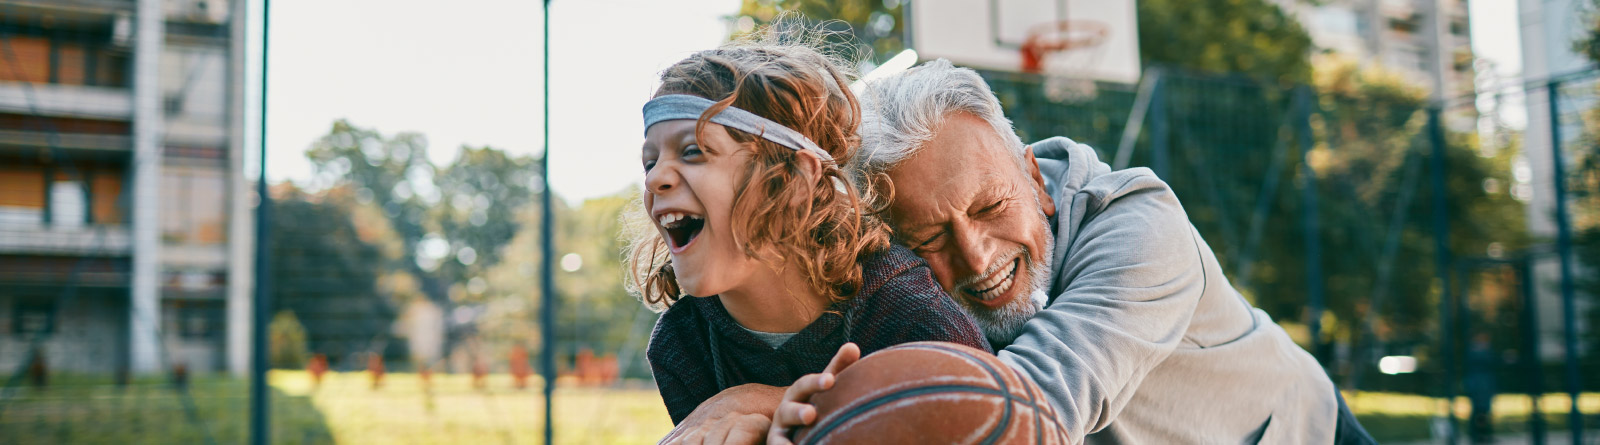 Grandfather  playing basketball with grandson